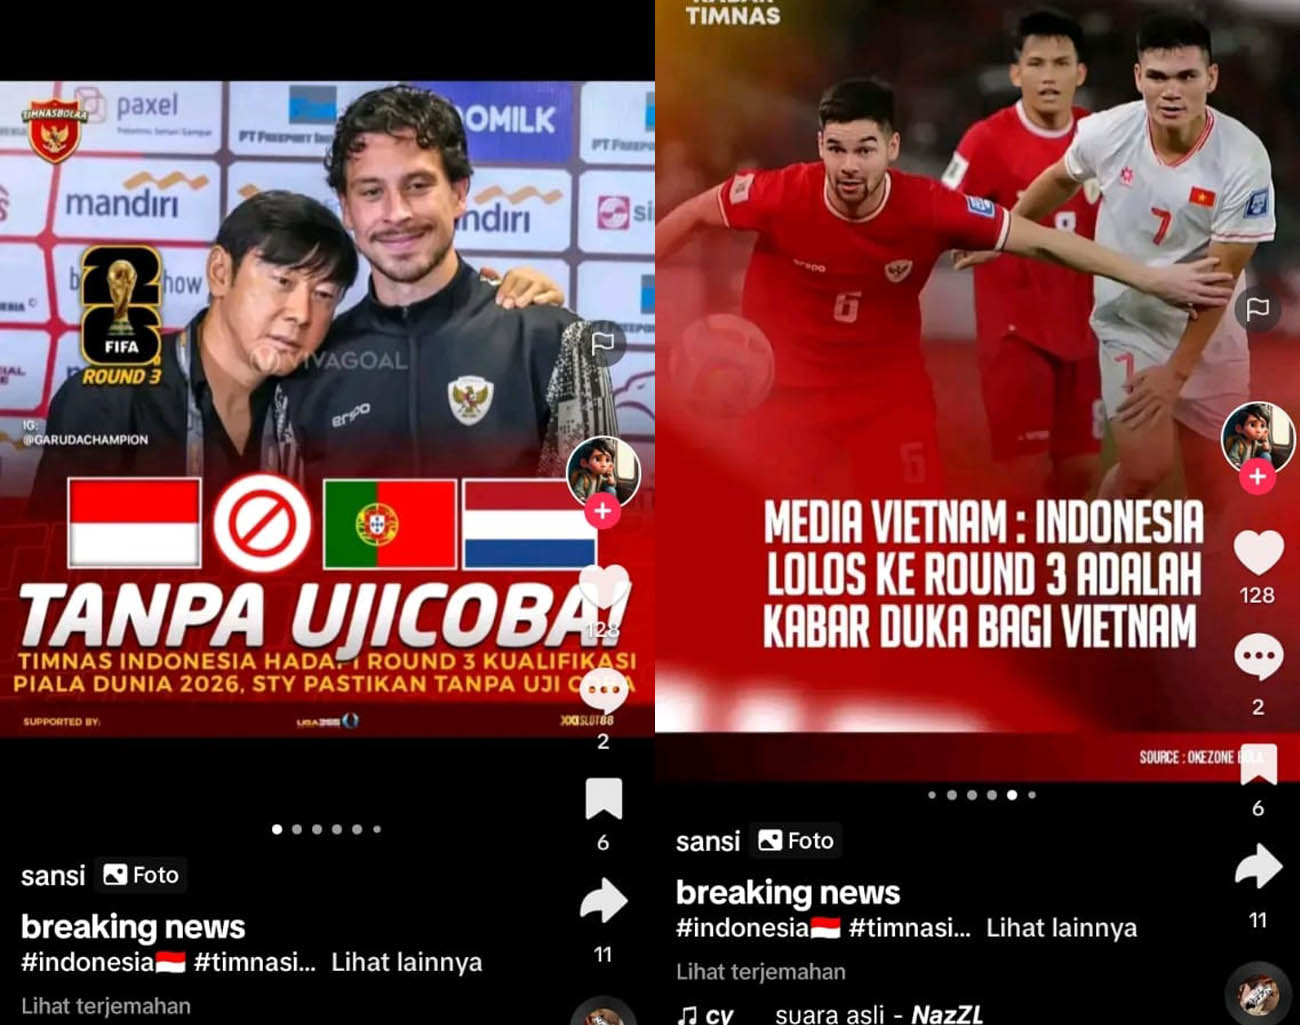 Indonesia vs Portugal Belum Jelas, Shin Tae Young Fokus Ronde 3, Kualifikasi Piala Dunia 2026